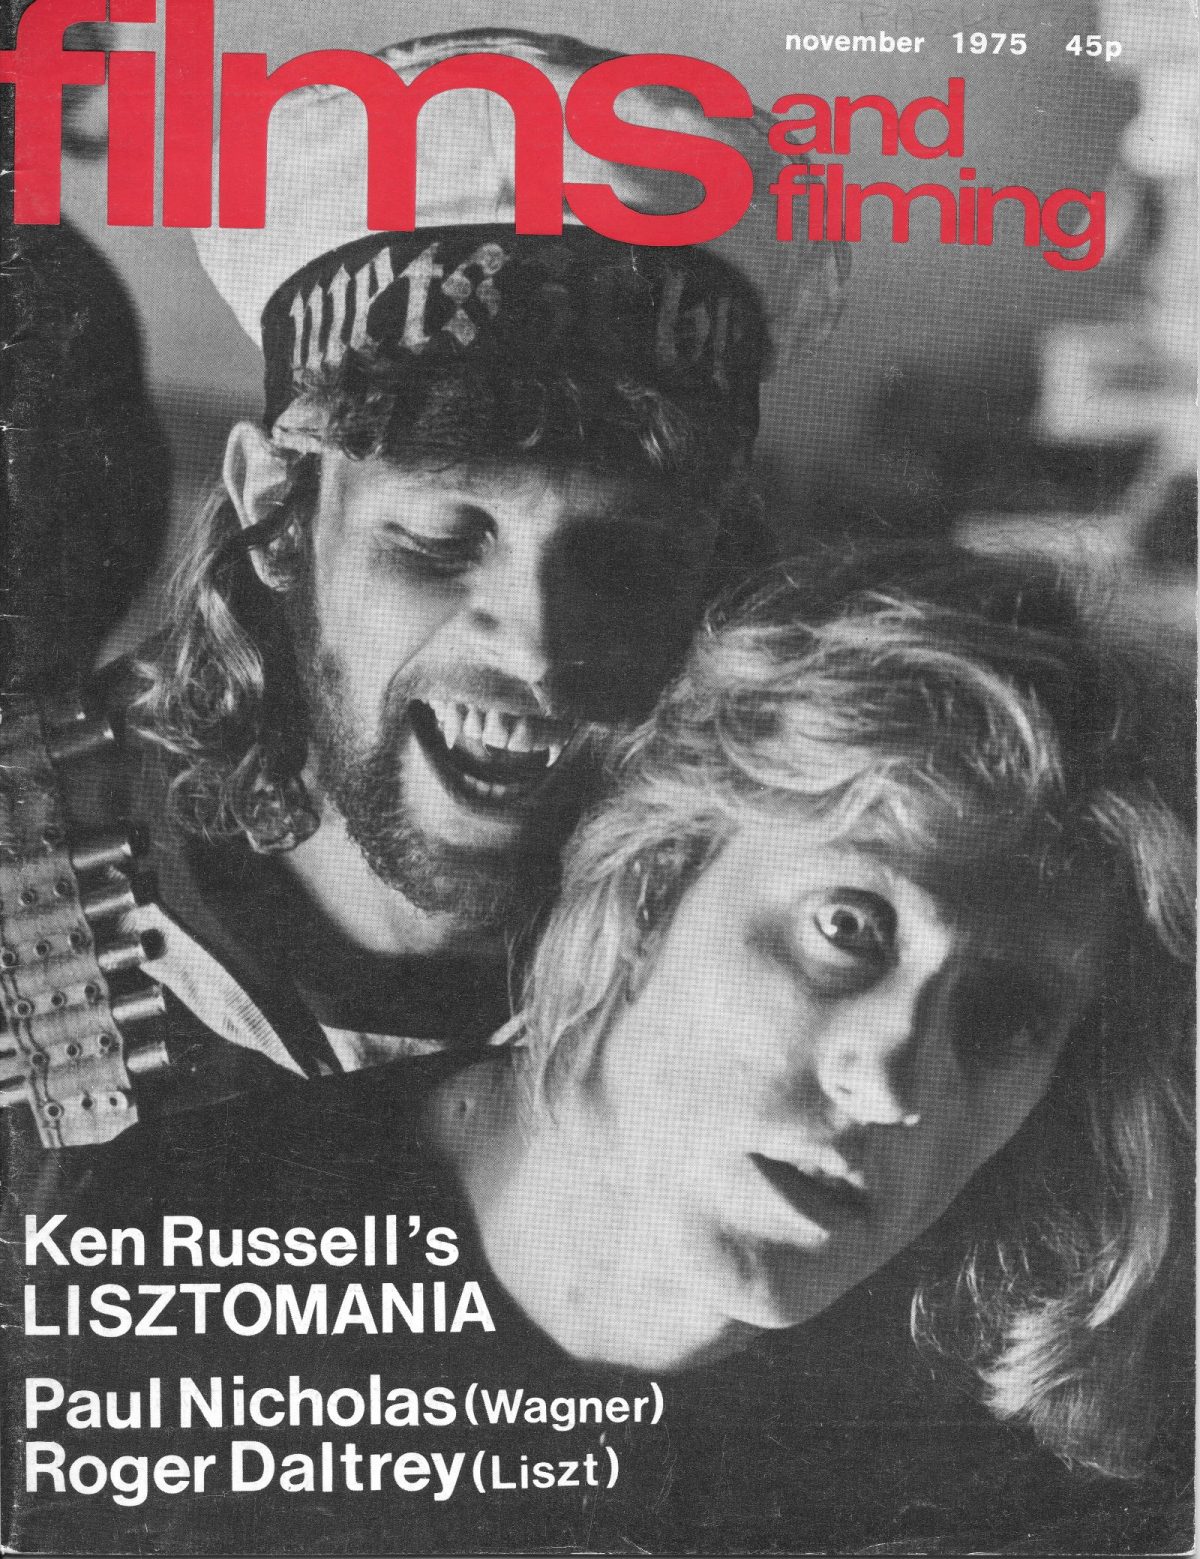 Films & Filming, film, magazines, Ken Russell, Paul Nicholas, Roger Daltrey, Lisztomania, 1970s